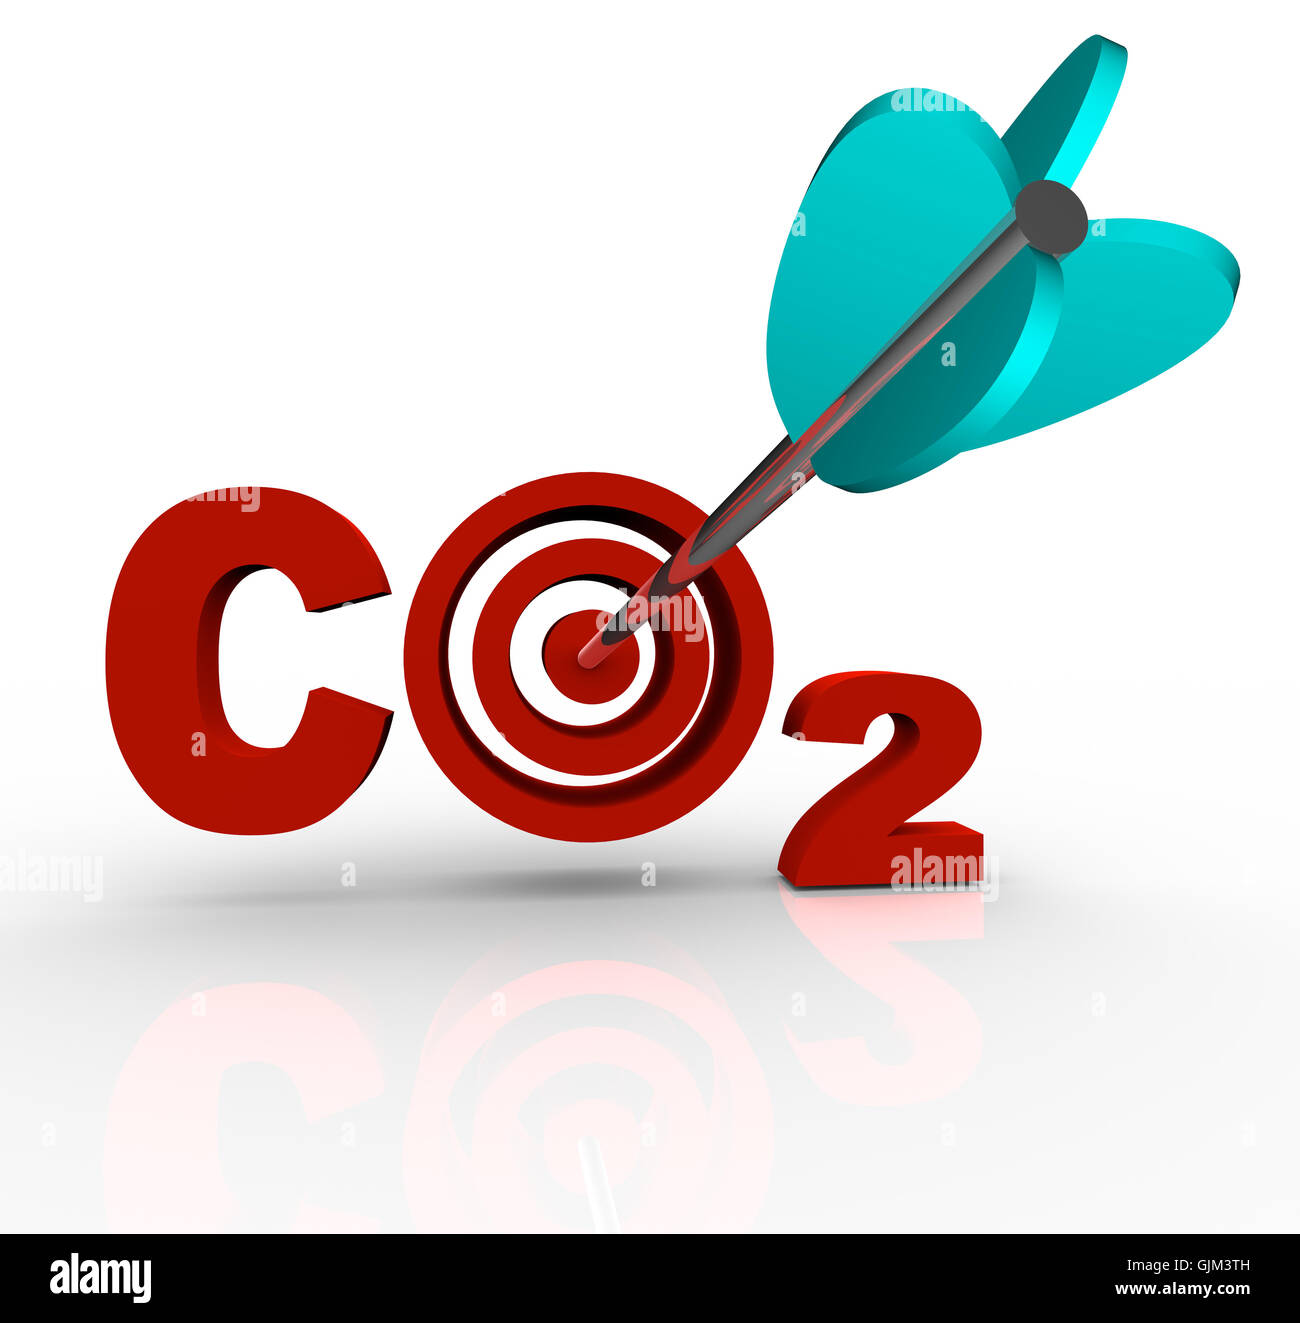 CO2-CO2-Reduktionsziel und Ziel Stockfoto